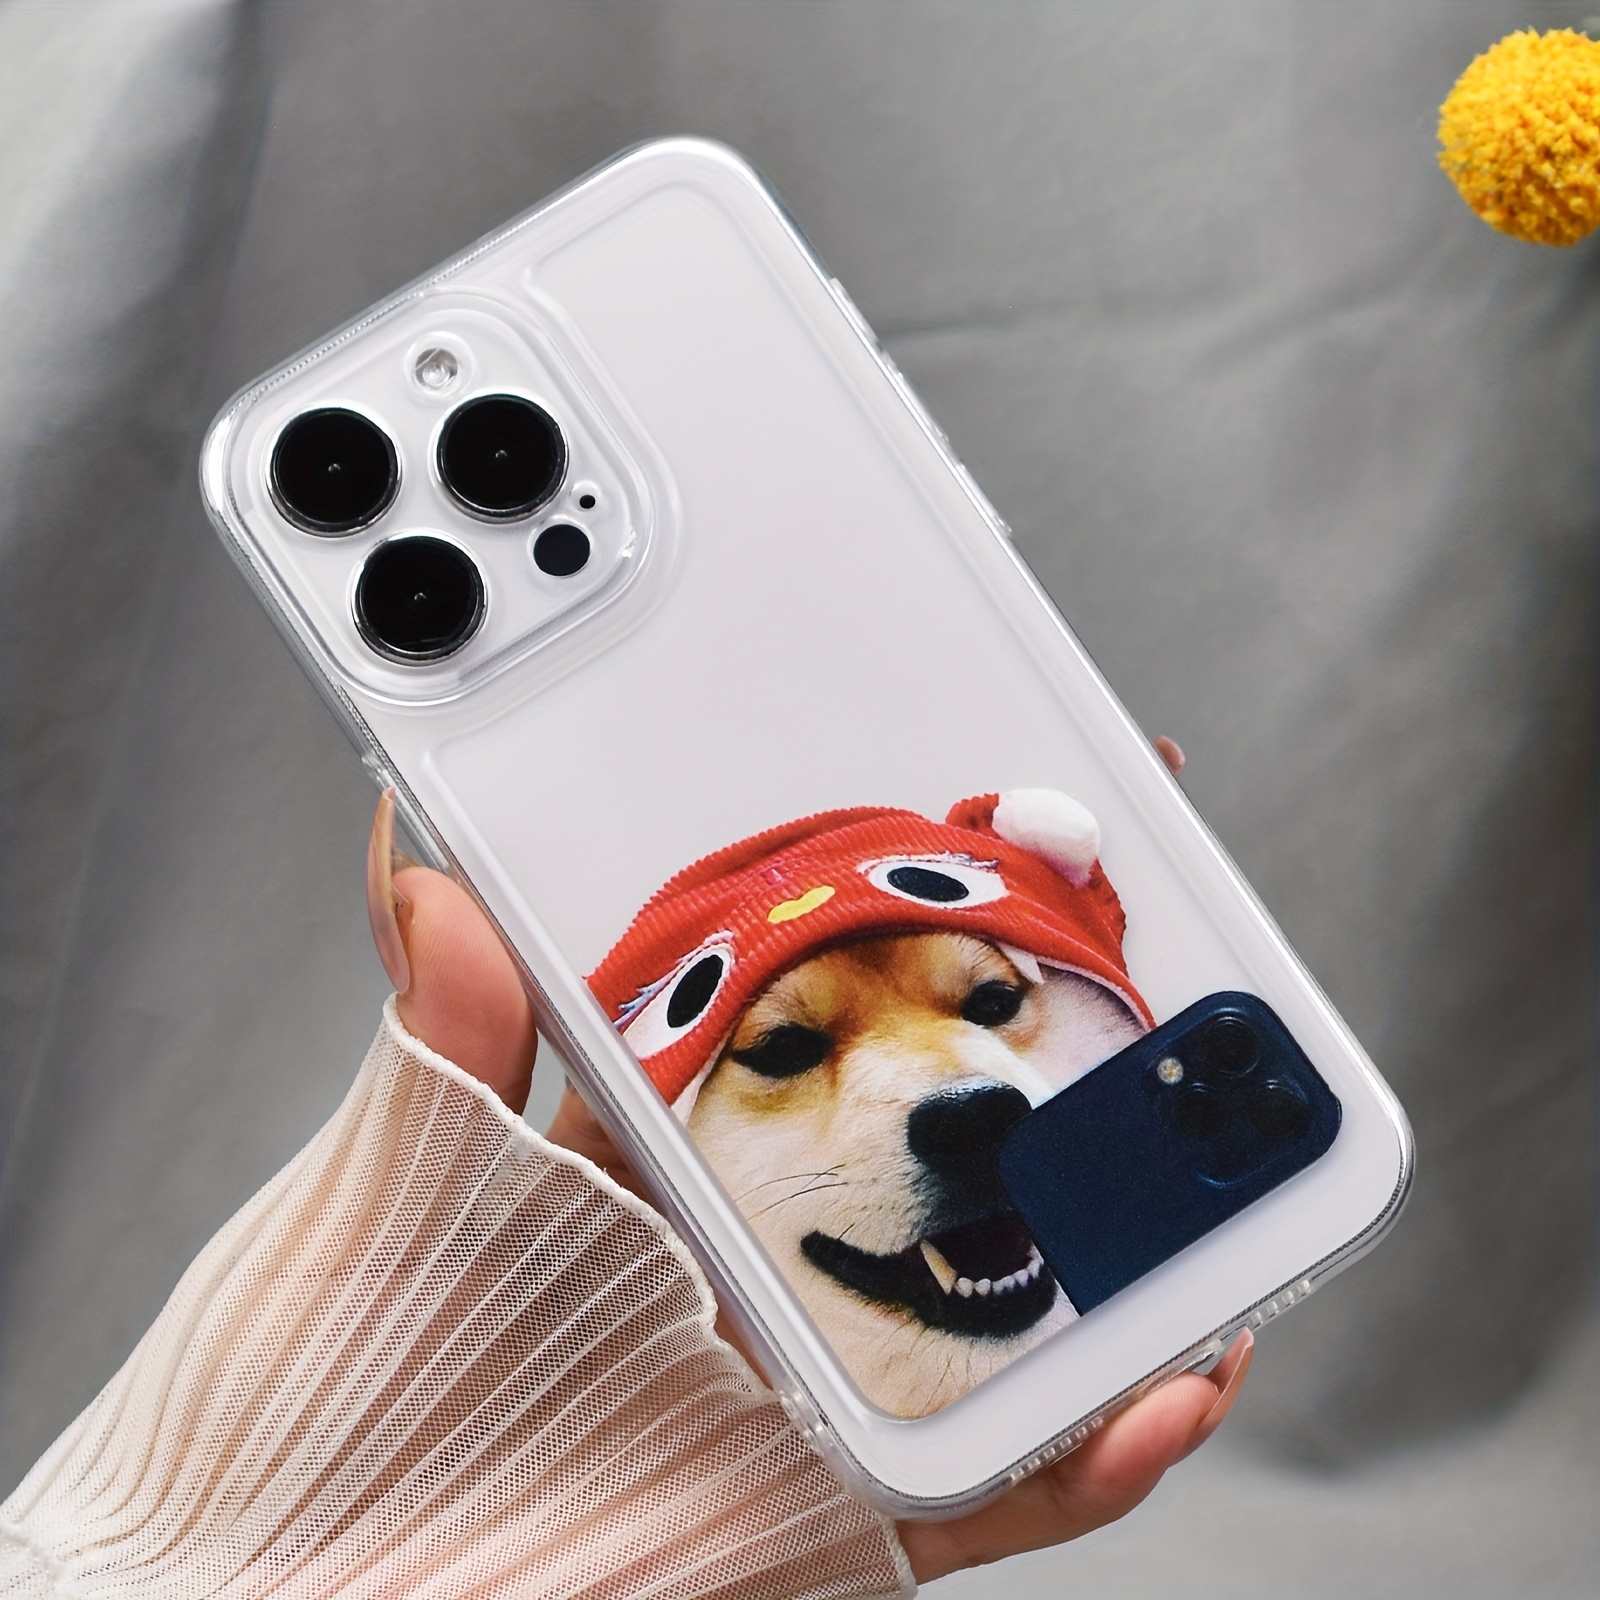 Jf2565 Cute Dog 001 ( Brand Puppy) English Title: Cuddly Dog Phone